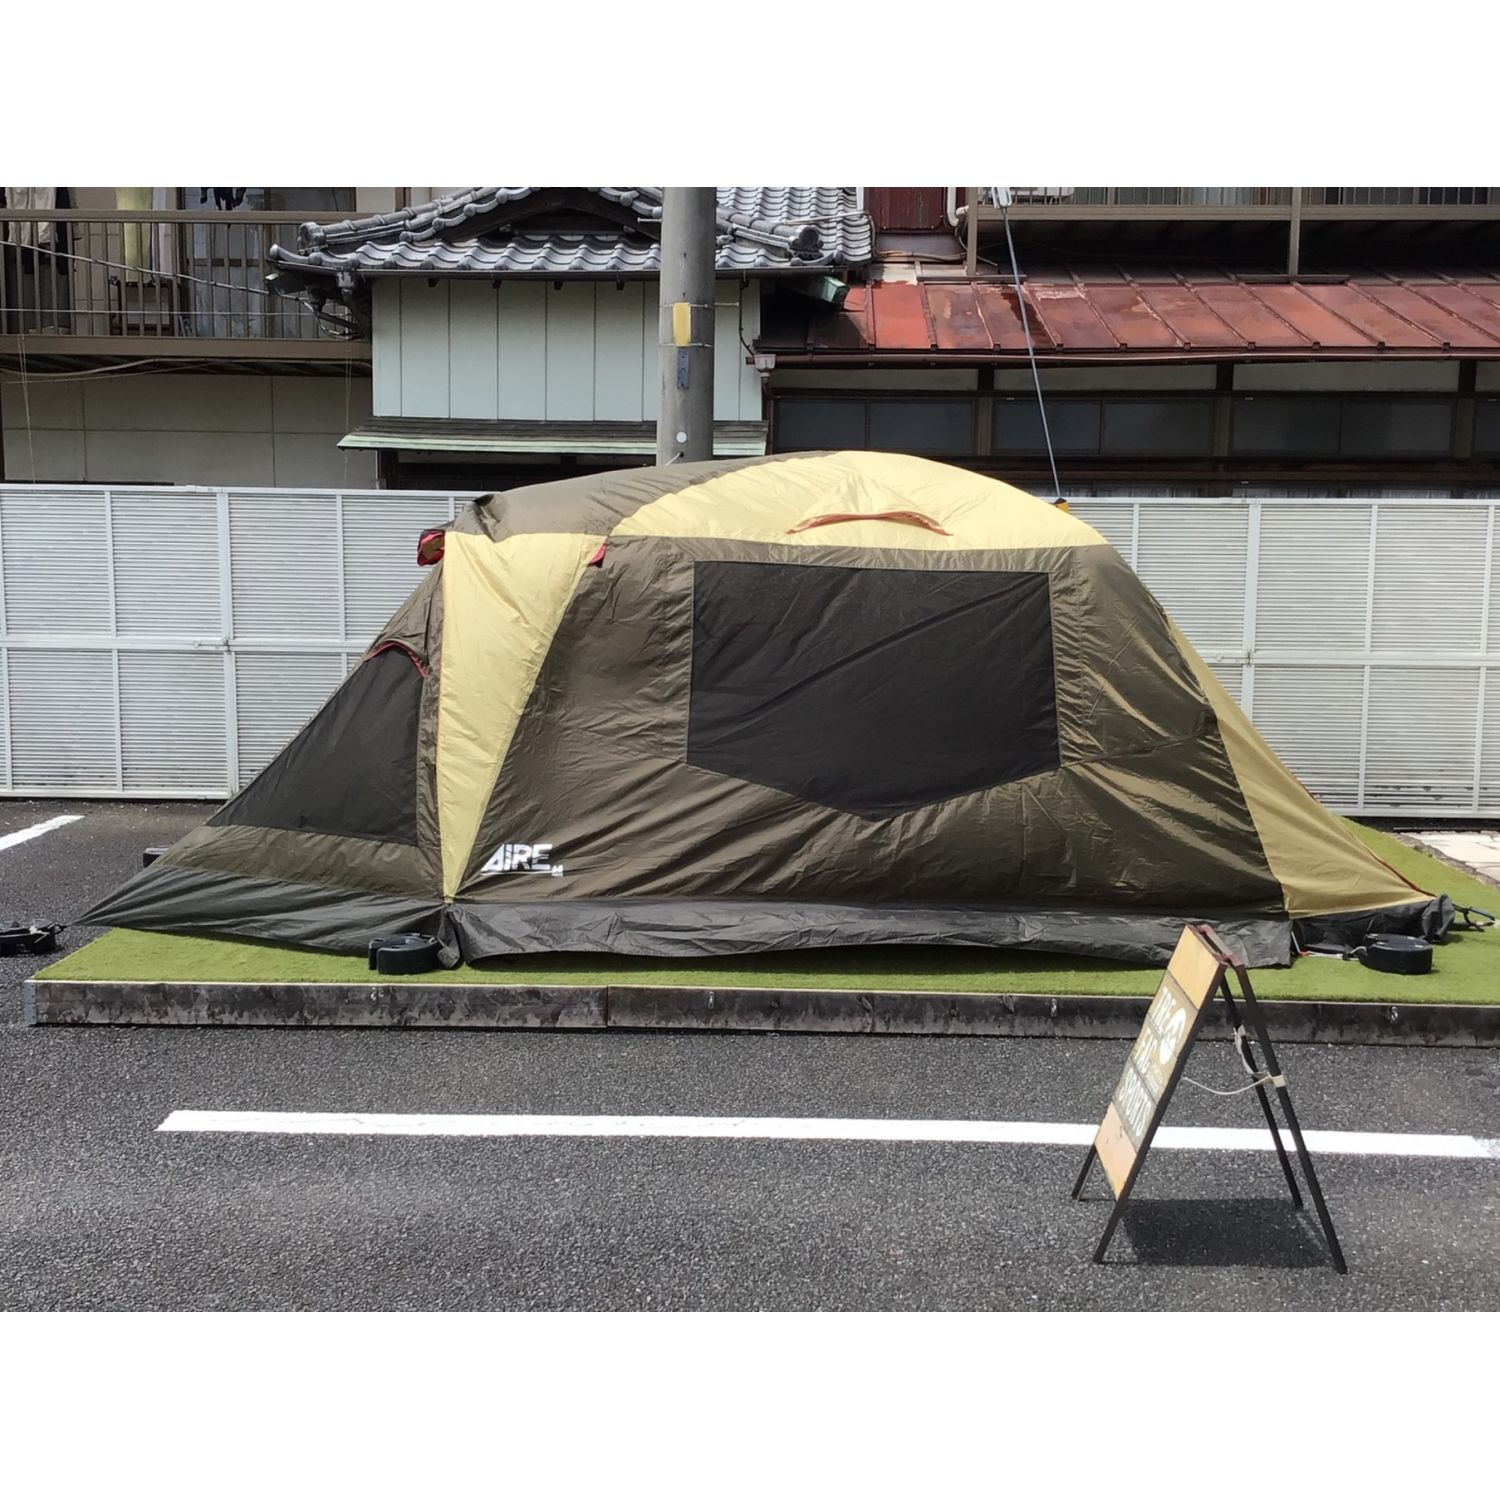 OGAWA CAMPAL (オガワキャンパル) ドームテント 廃盤品 2658